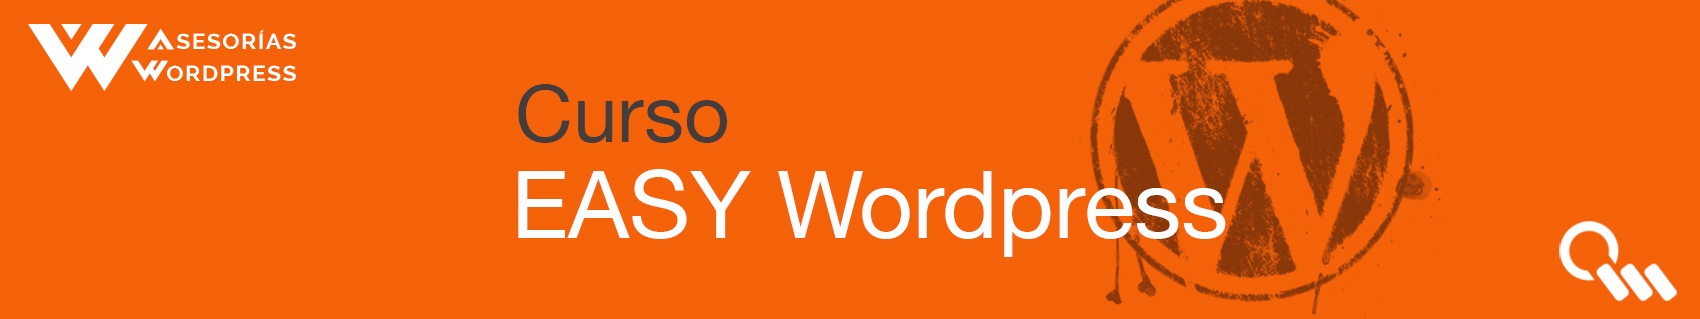 Banner-Easy-Wordpress-curso-WP-carlos-marcano